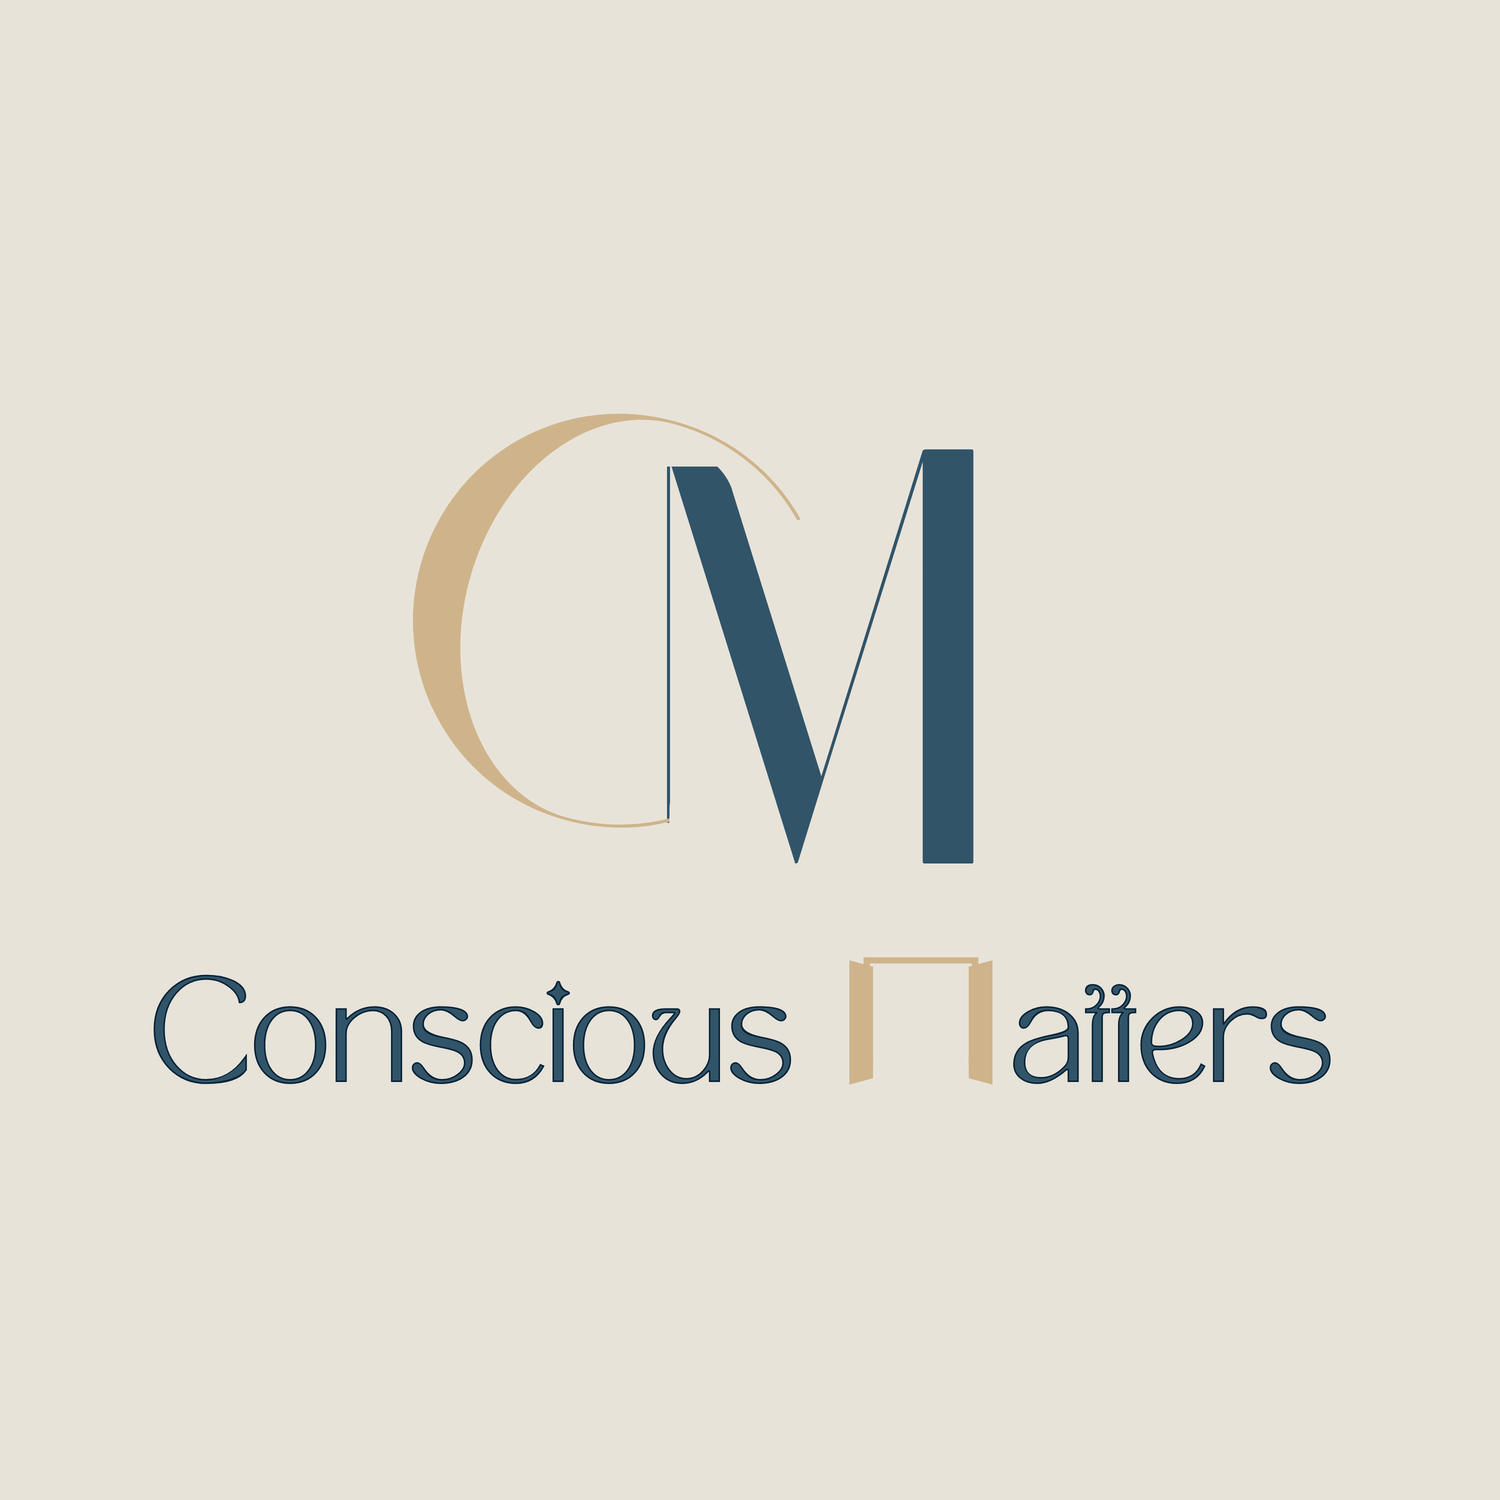 Conscious Matters ®